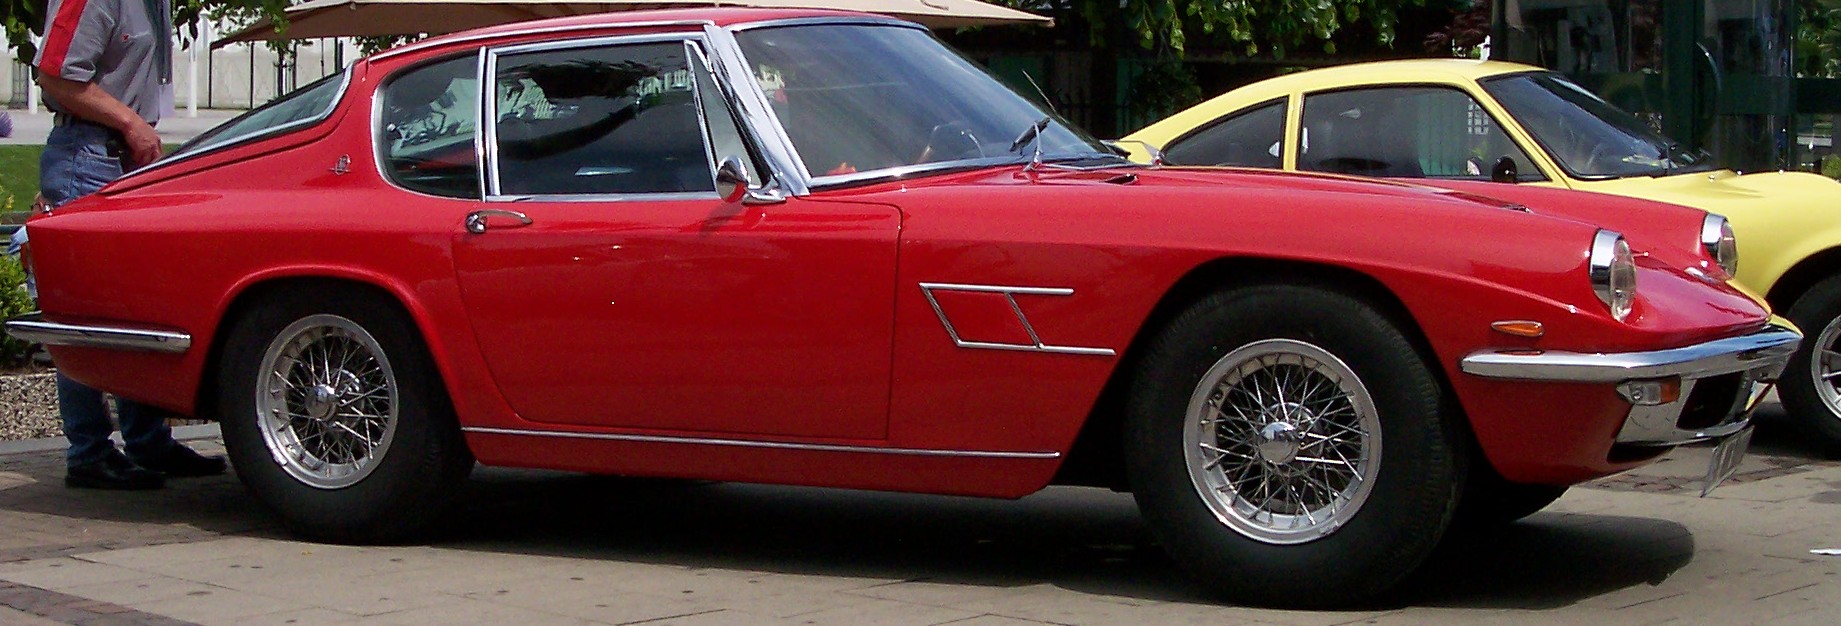 Maserati Mistral: 2 фото